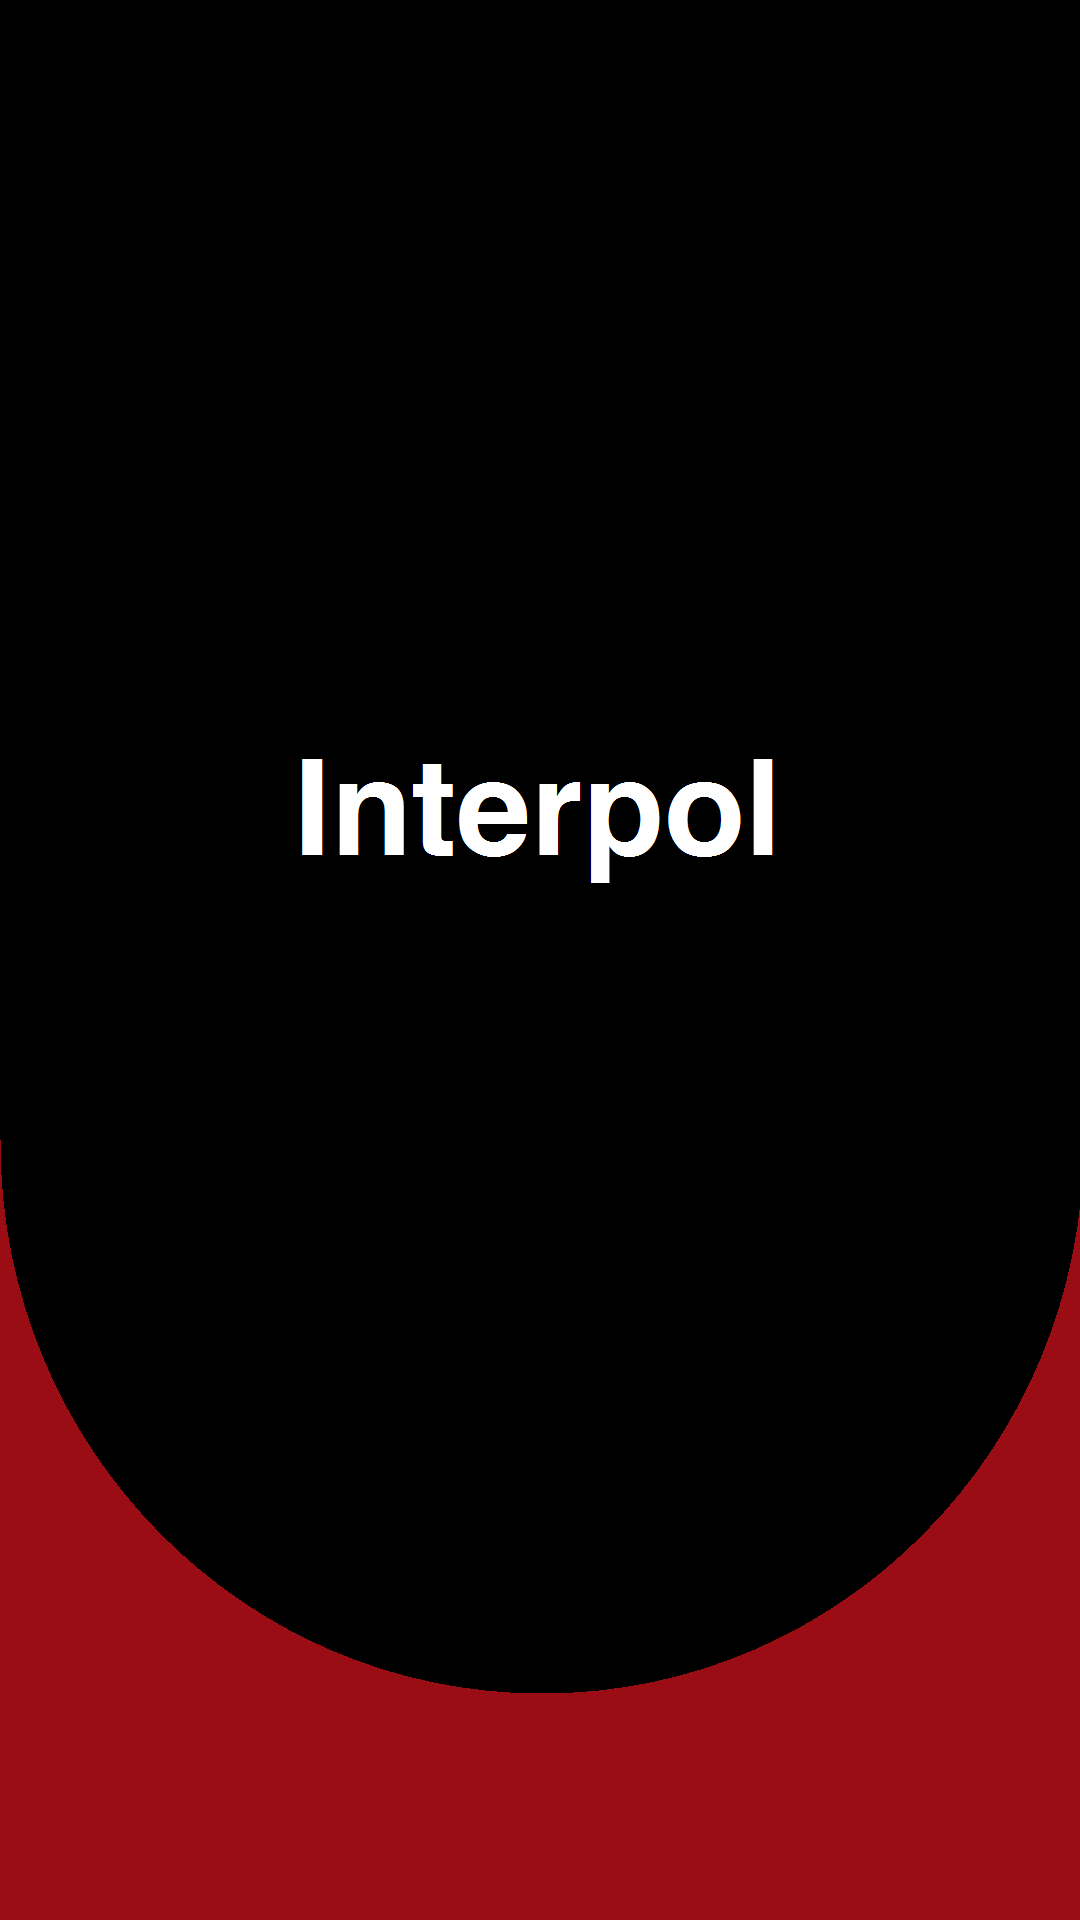 Made an Interpol lock screen wallpaper in MS Paint [1080x1920]: Interpol